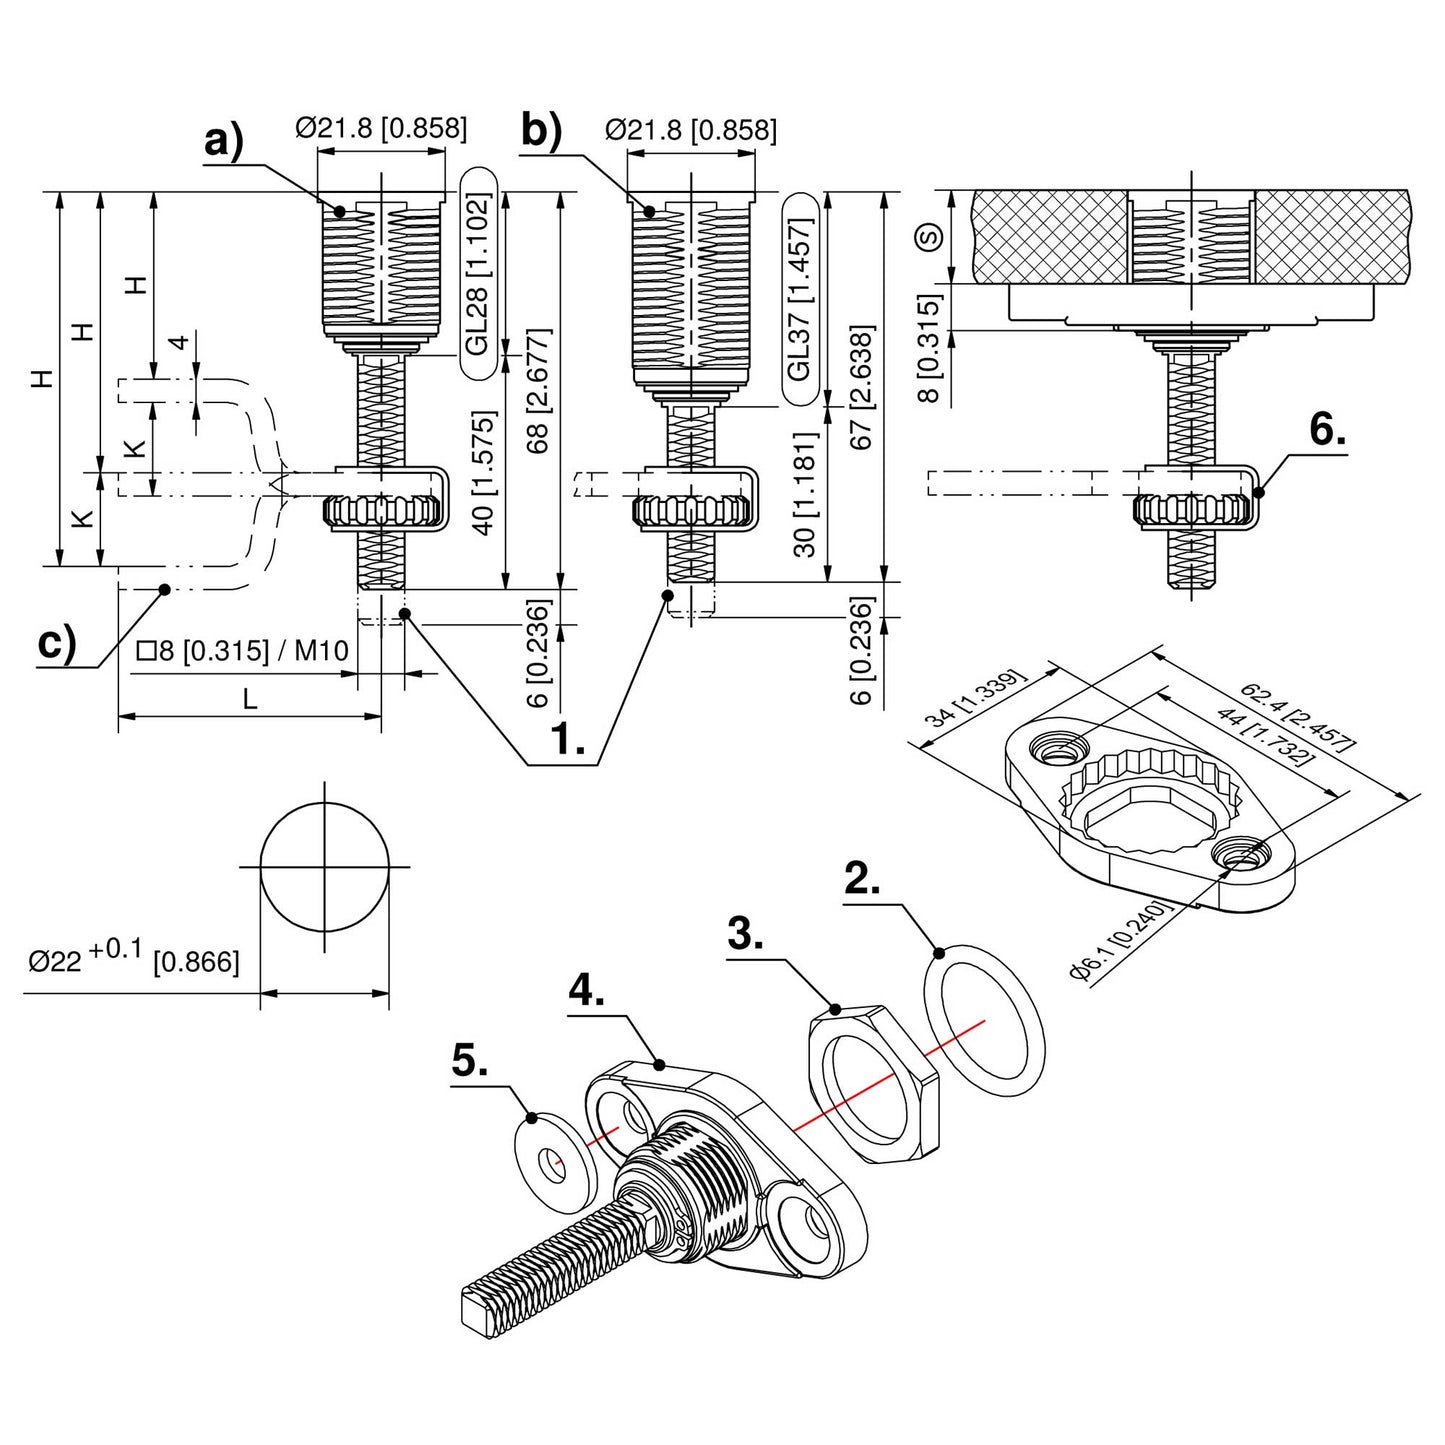 Dirak Flush-mounted Adjustable Compression Latch - Stainless Steel